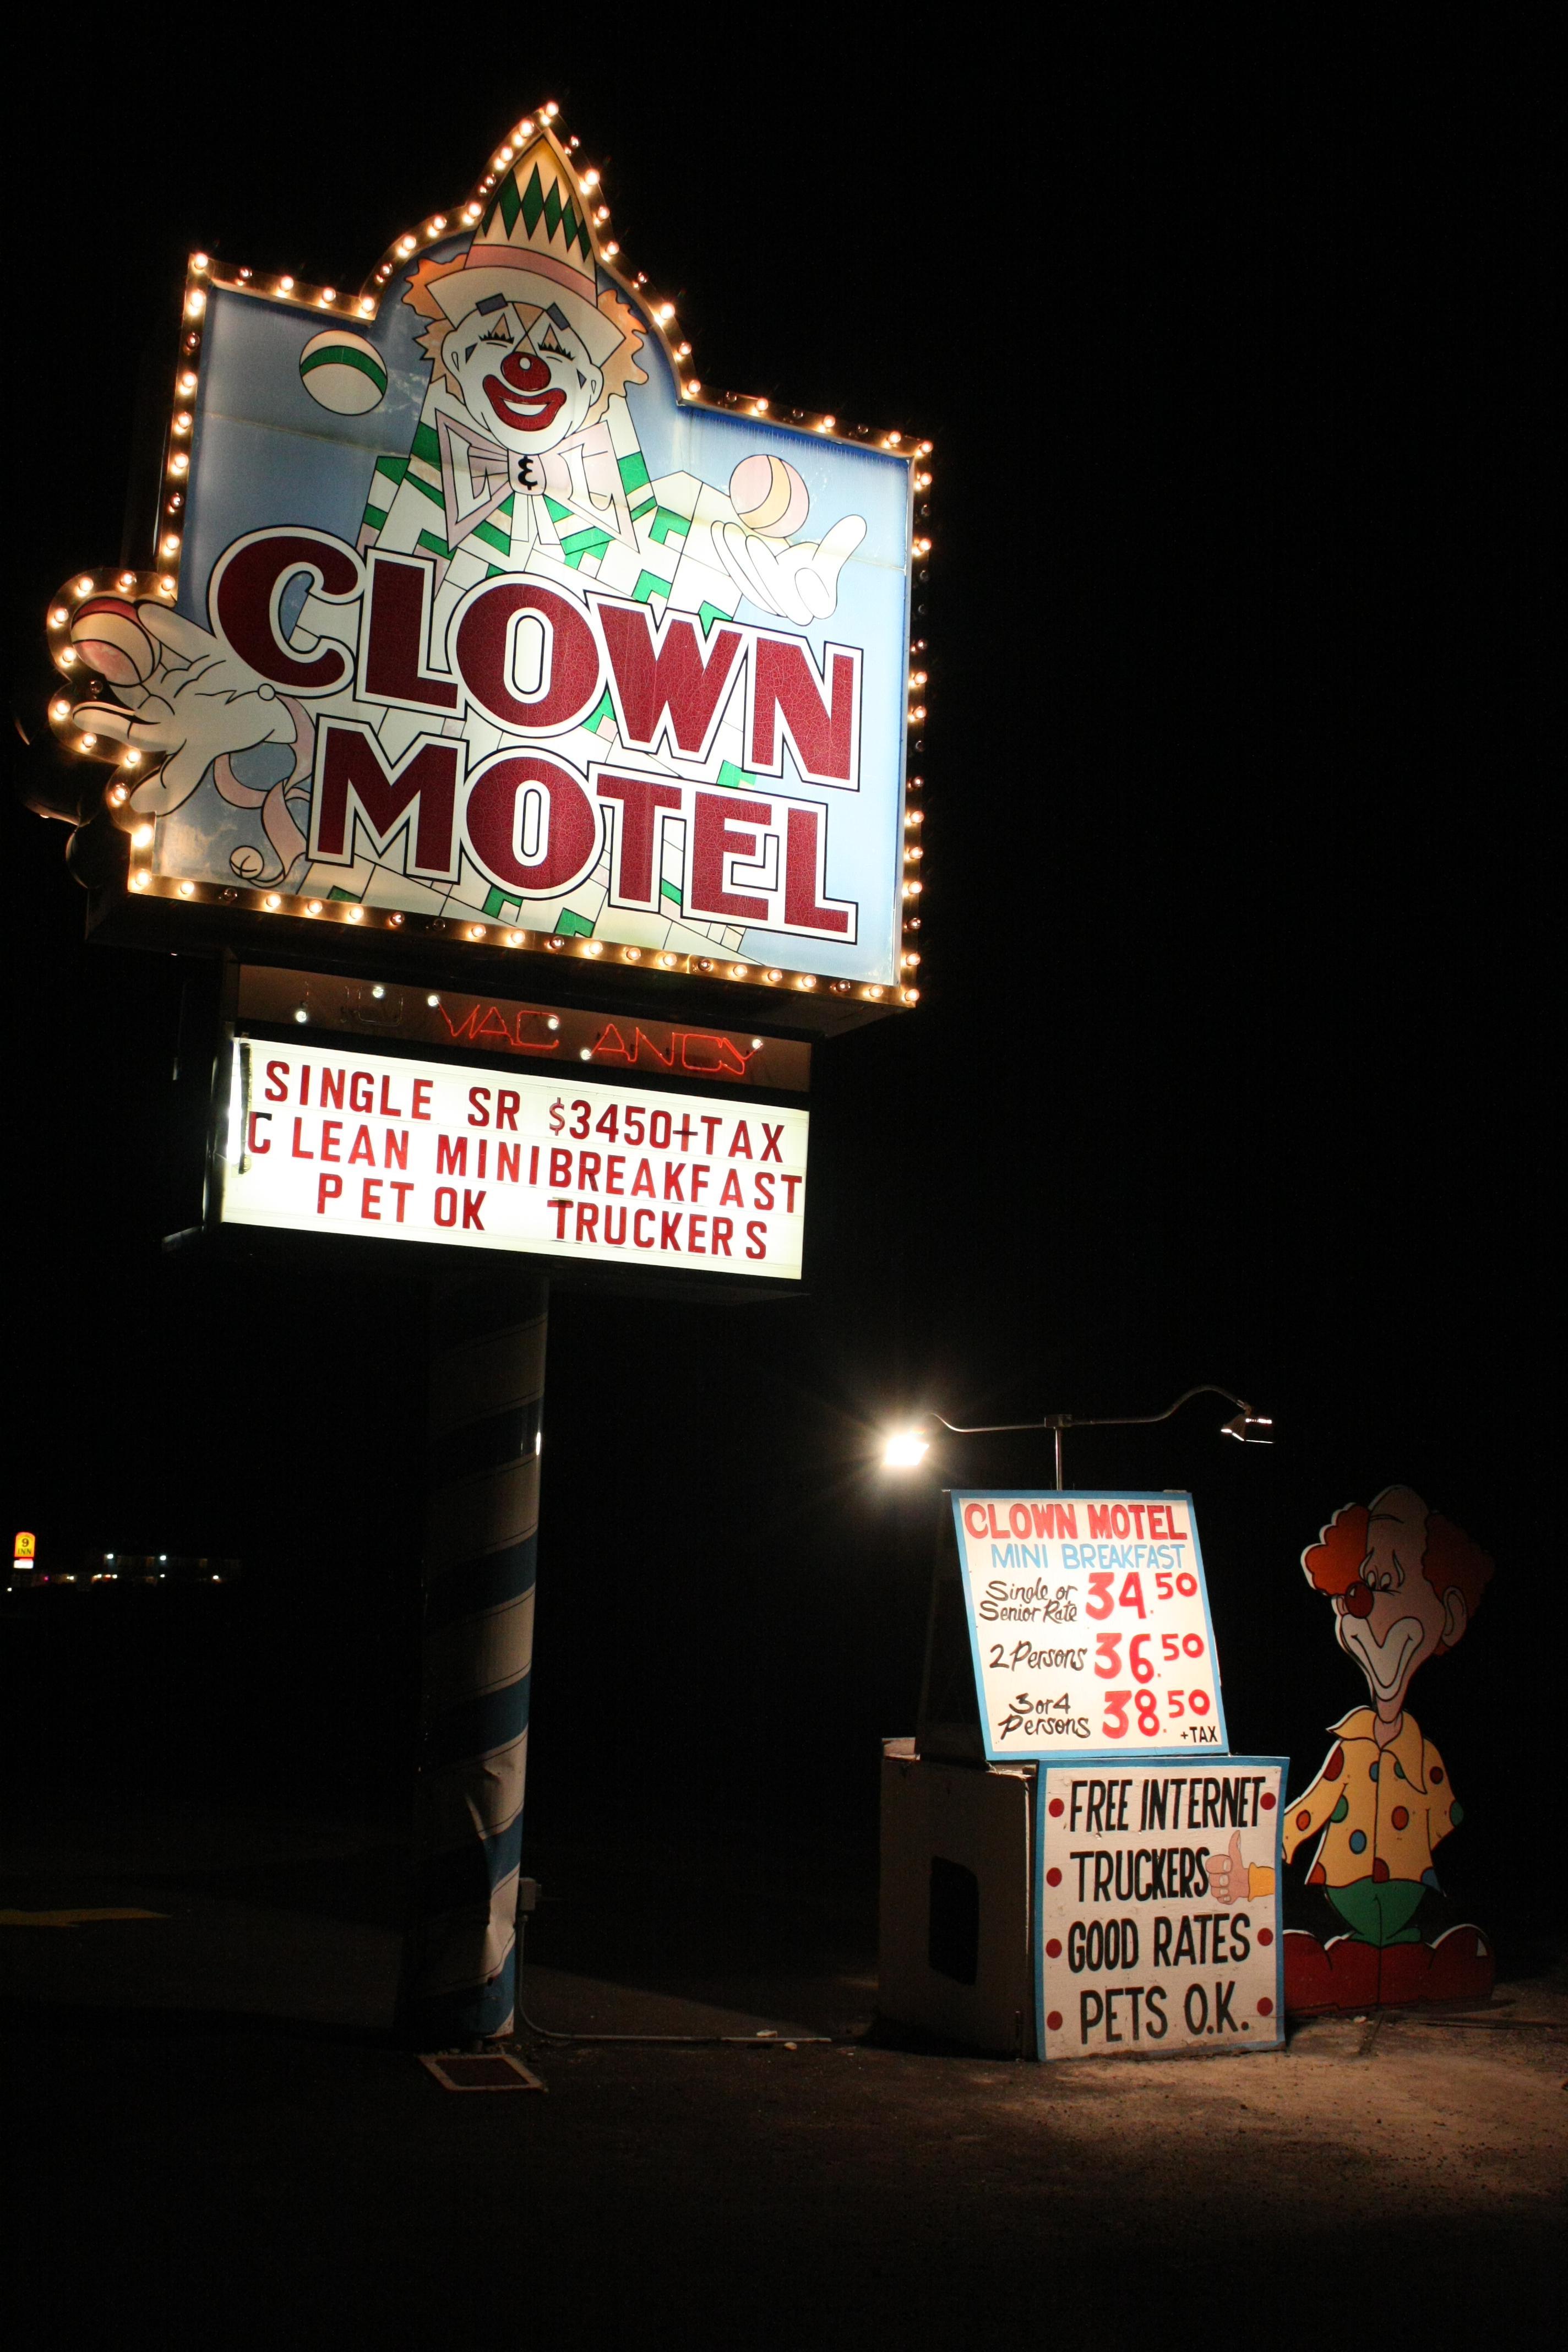 Clown Motel - 521 North Main Street, Tonopah, Nevada U.S.A. - July 6, 2009